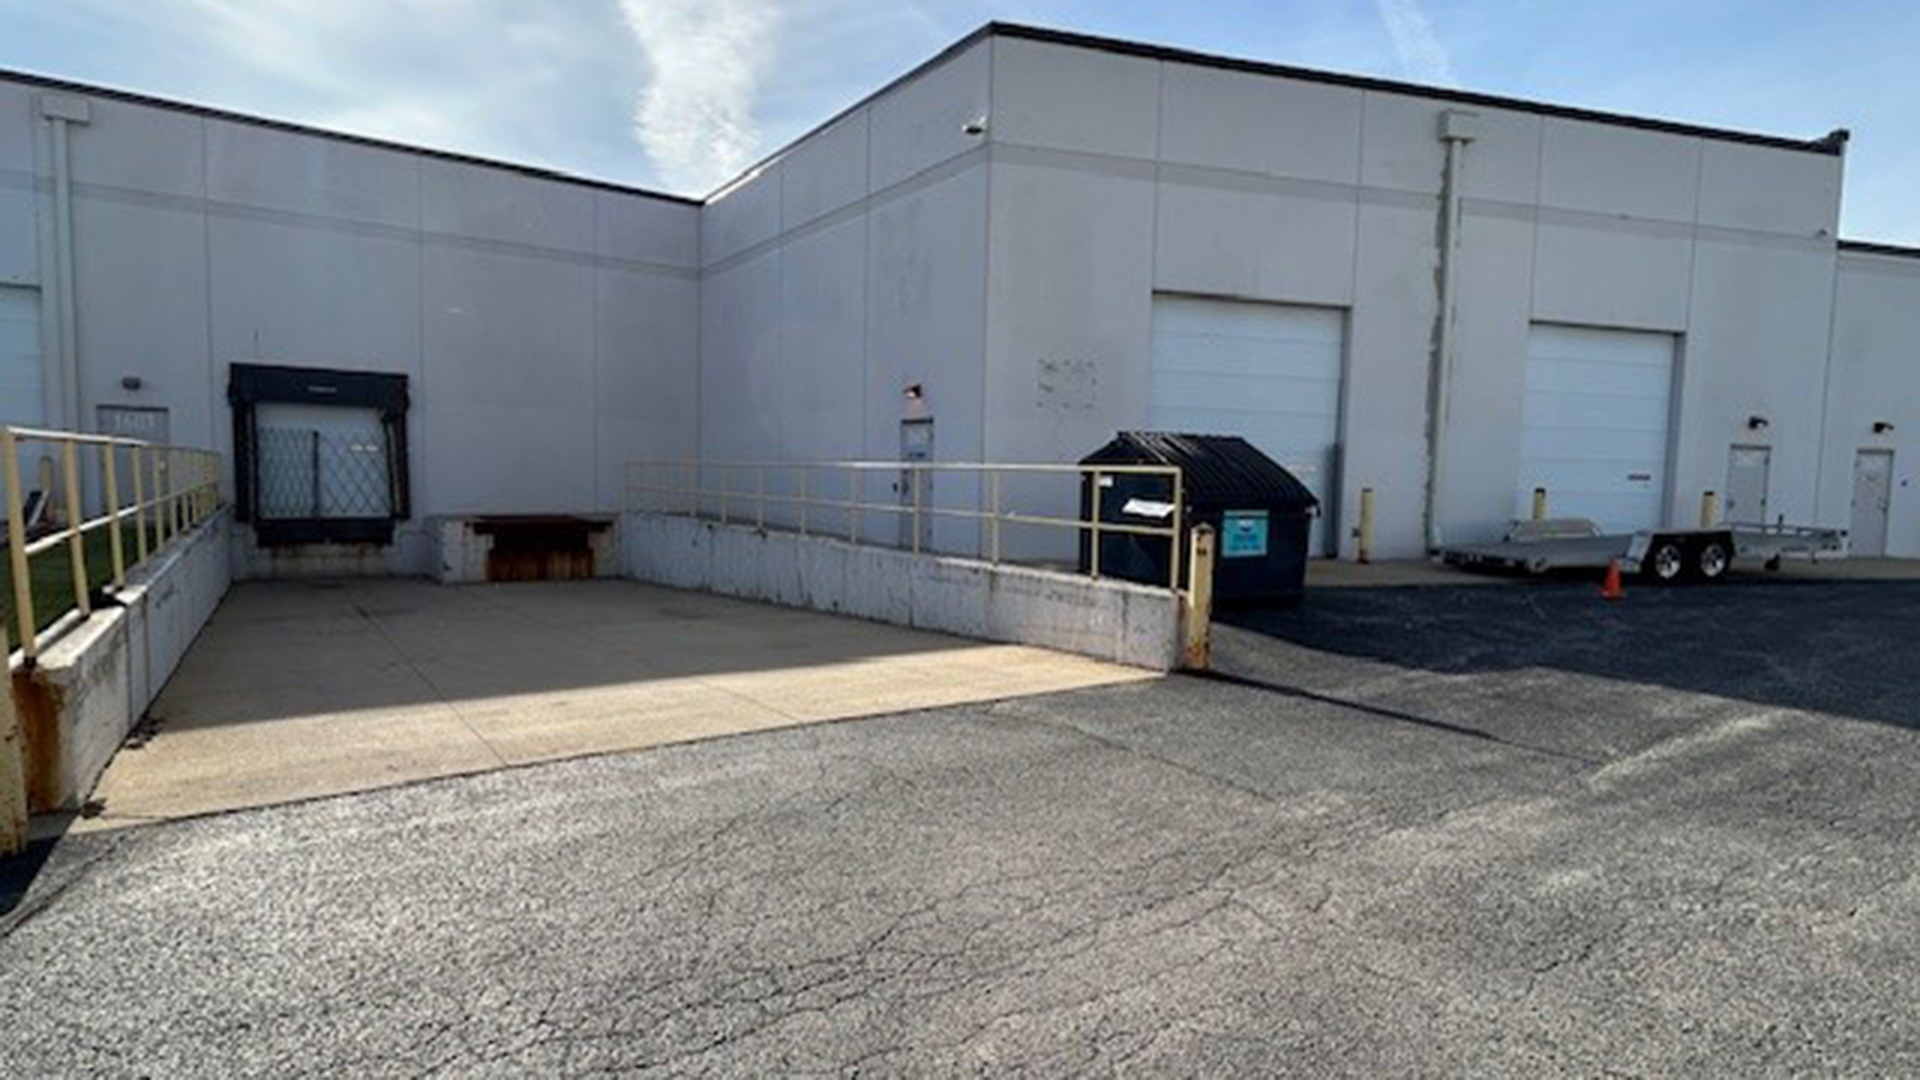 Outer shot of loading dock